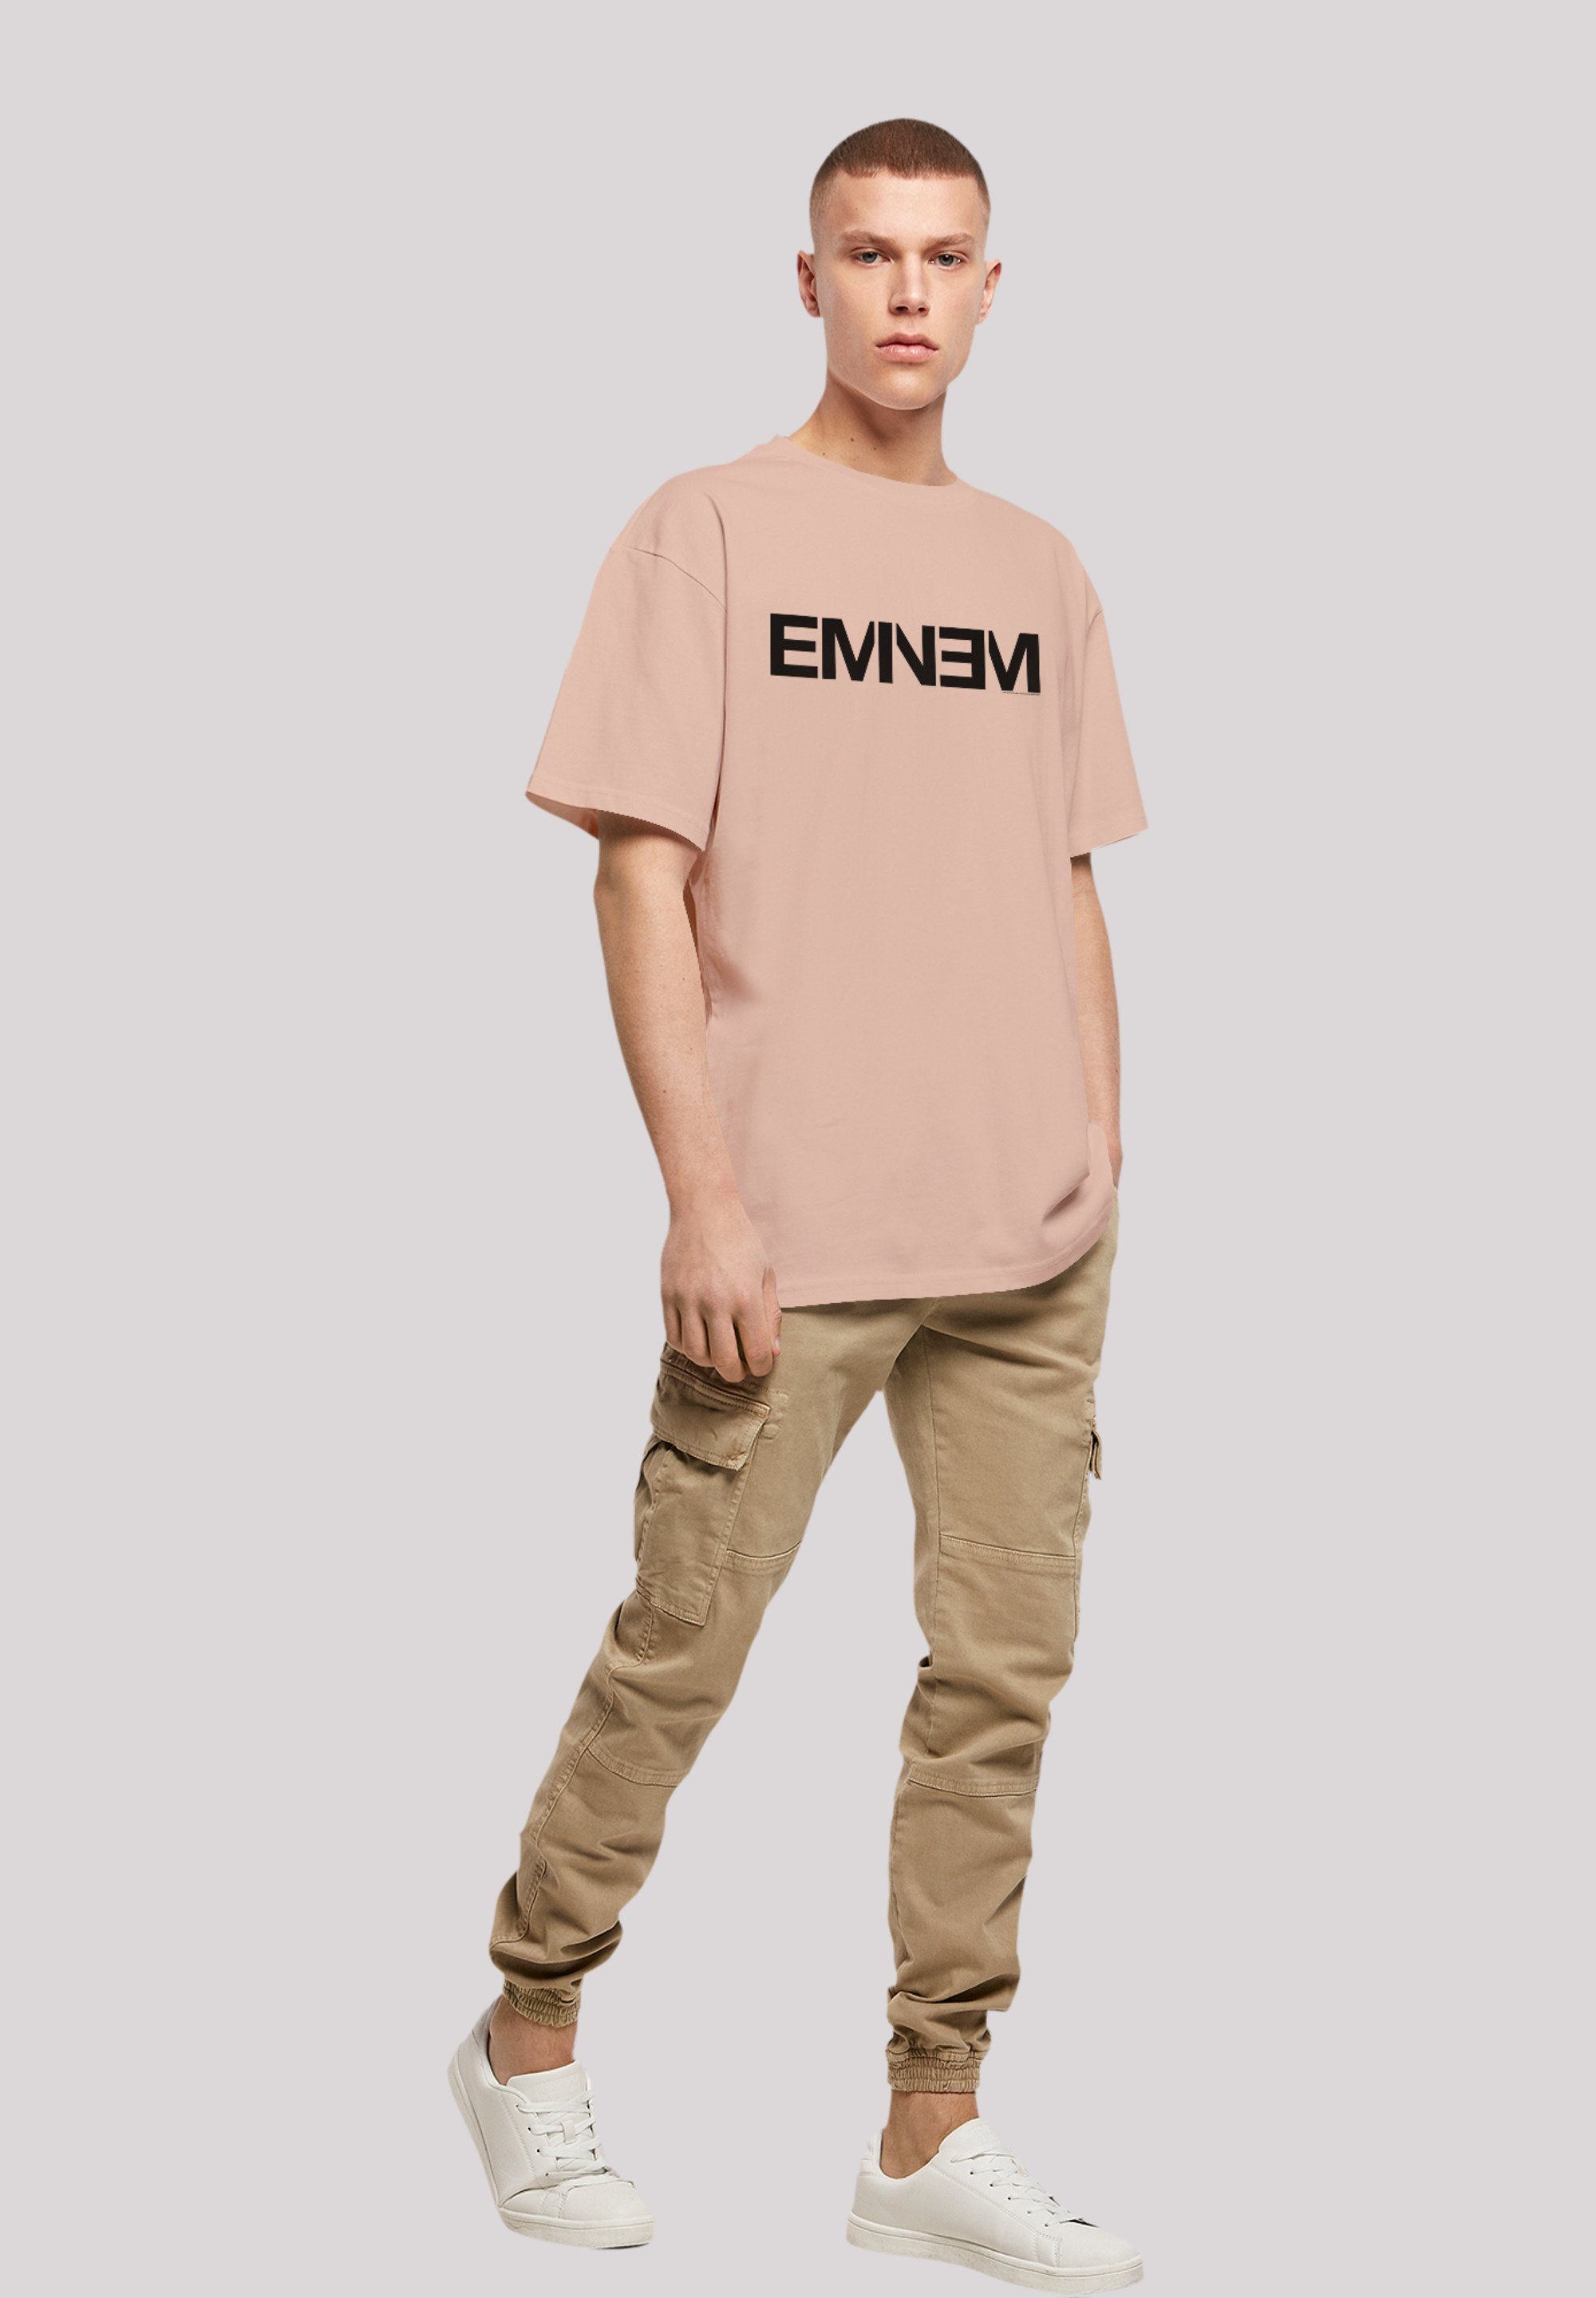 F4NT4STIC T-Shirt Eminem Hip Hop Qualität, Rap Musik Music Premium amber